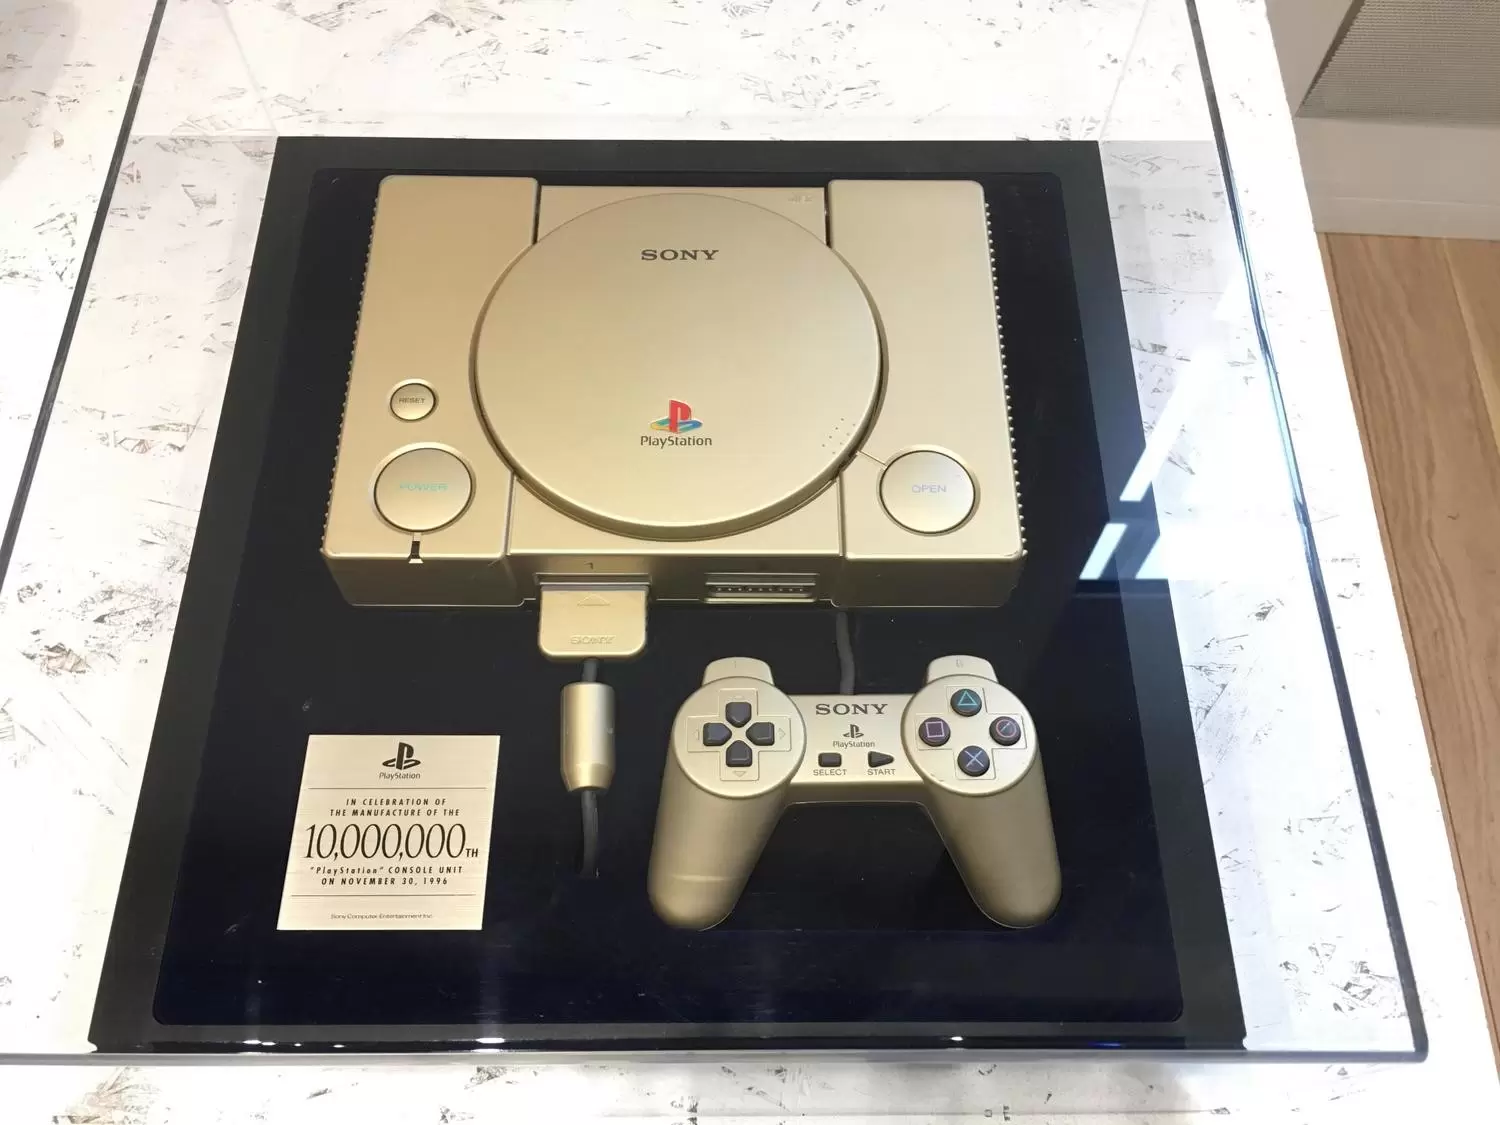 PlayStation material - PlayStation 10 Million Gold